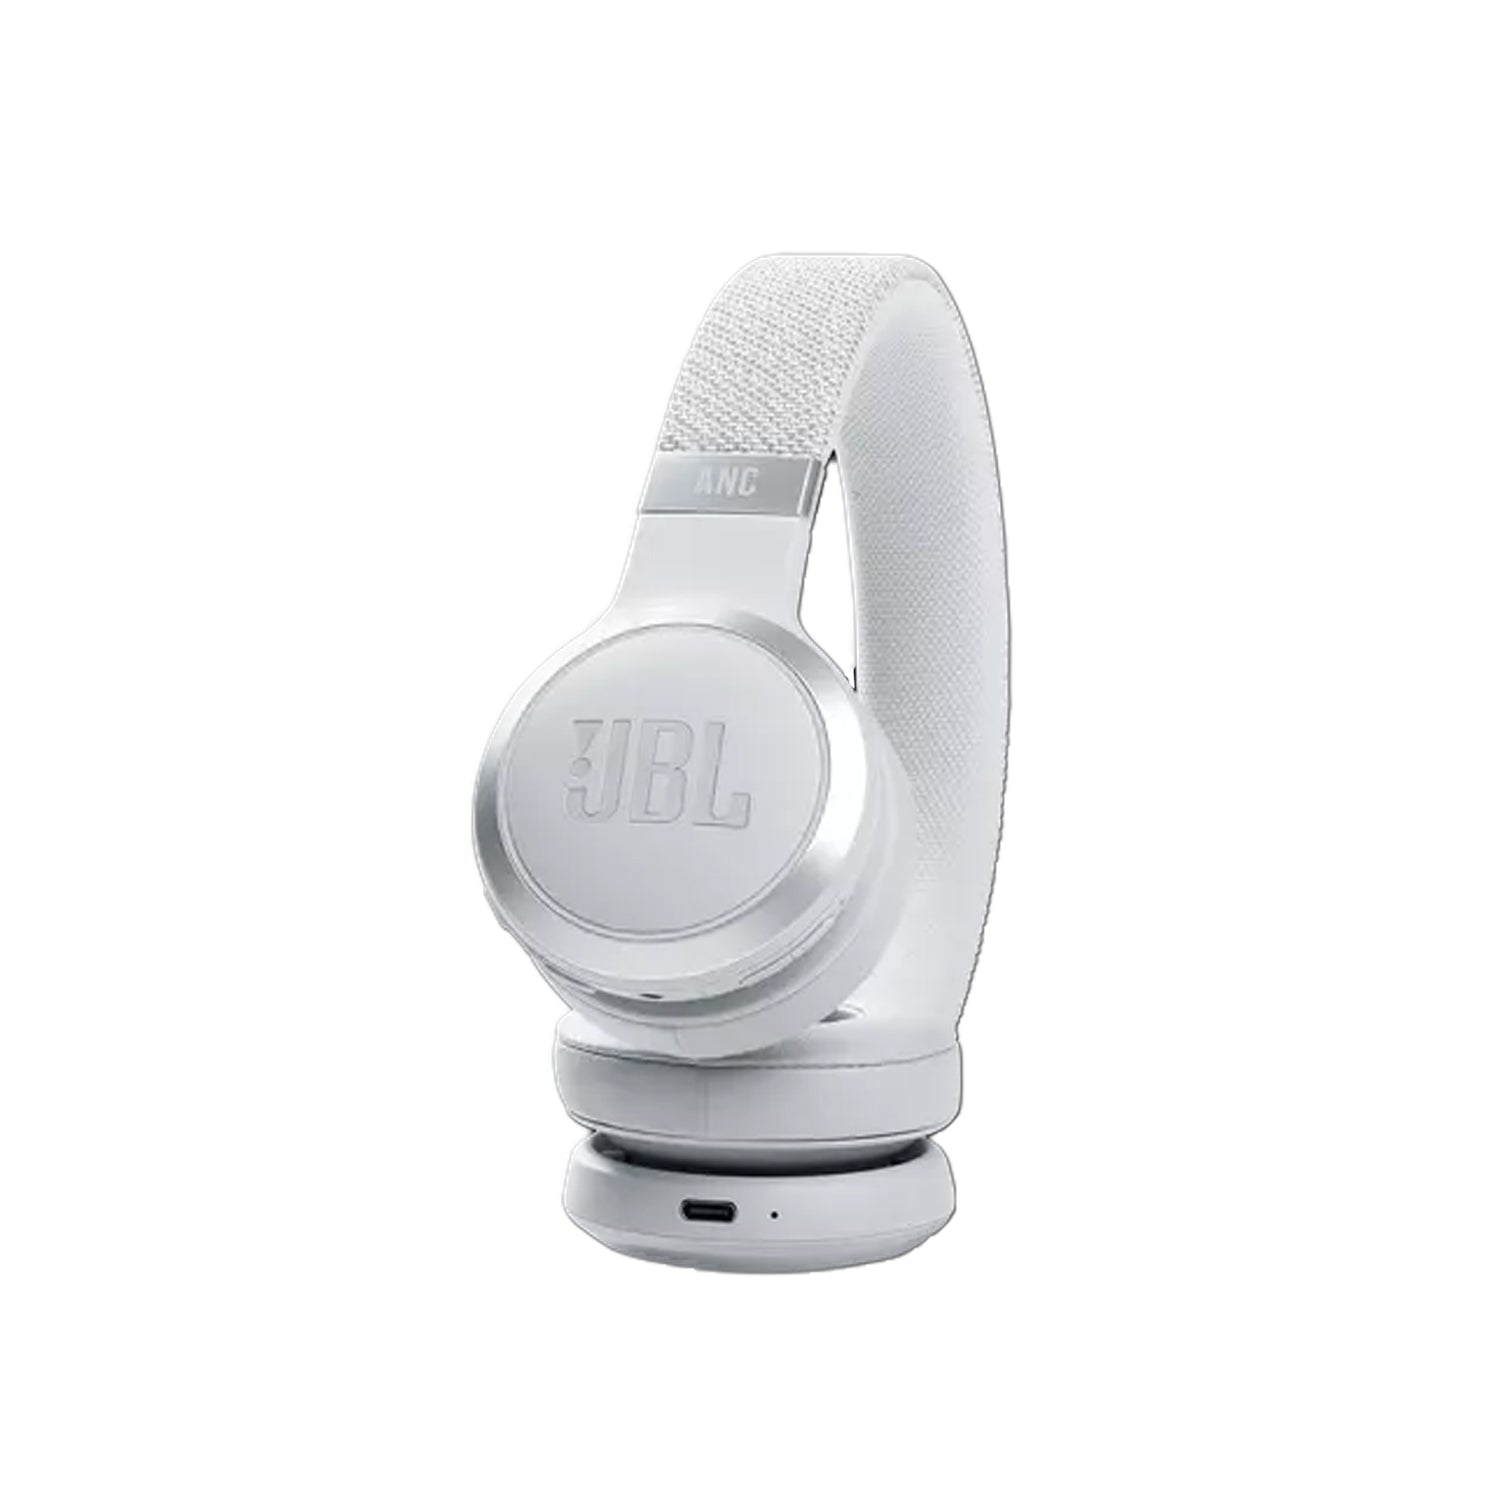 JBL Live 460NC Wireless On-Ear Noise Cancelling Headphones